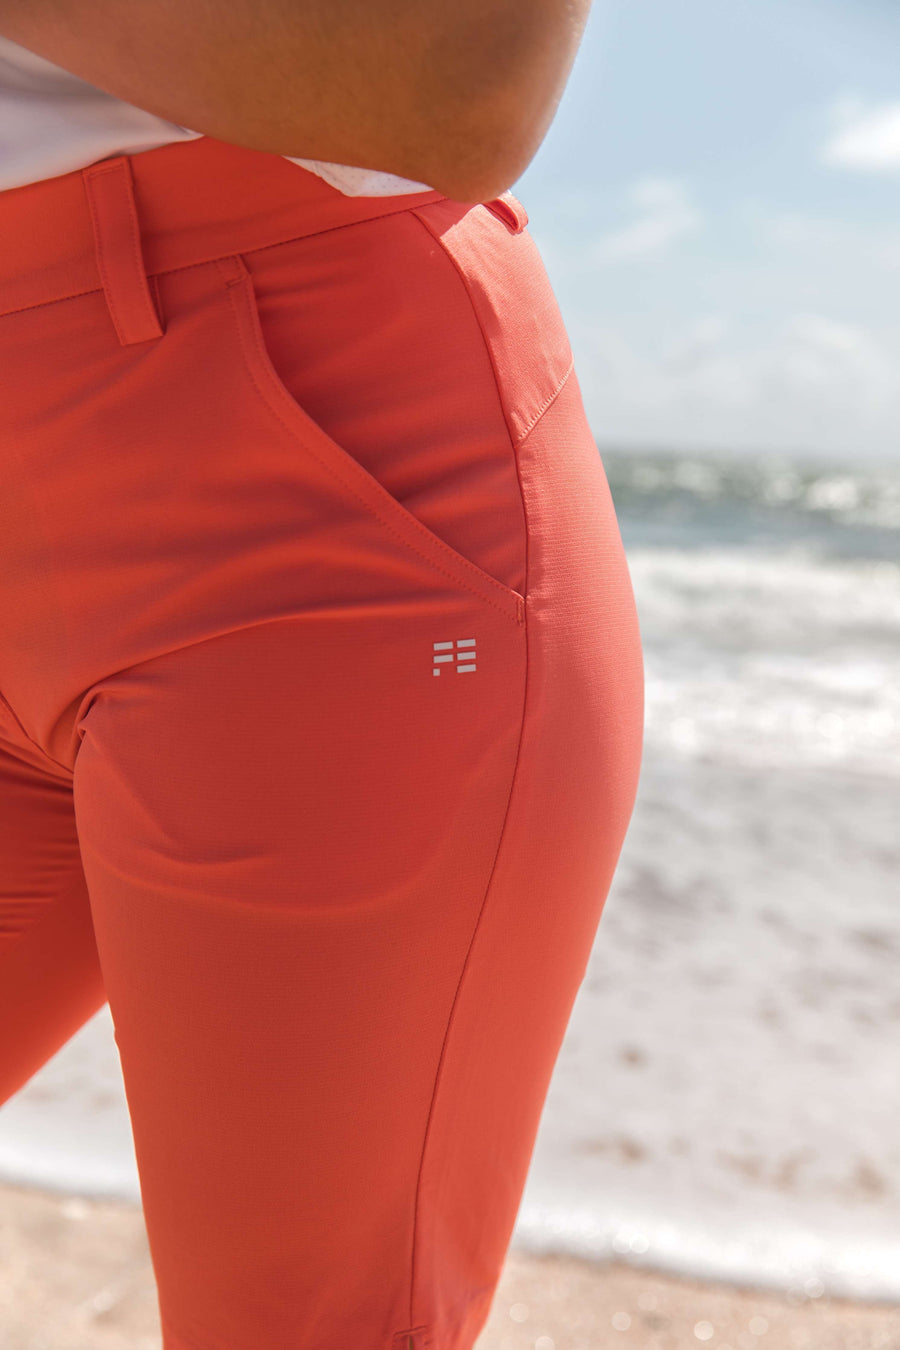 Women's orange golf shorts. Lightweight, technical fabric. 